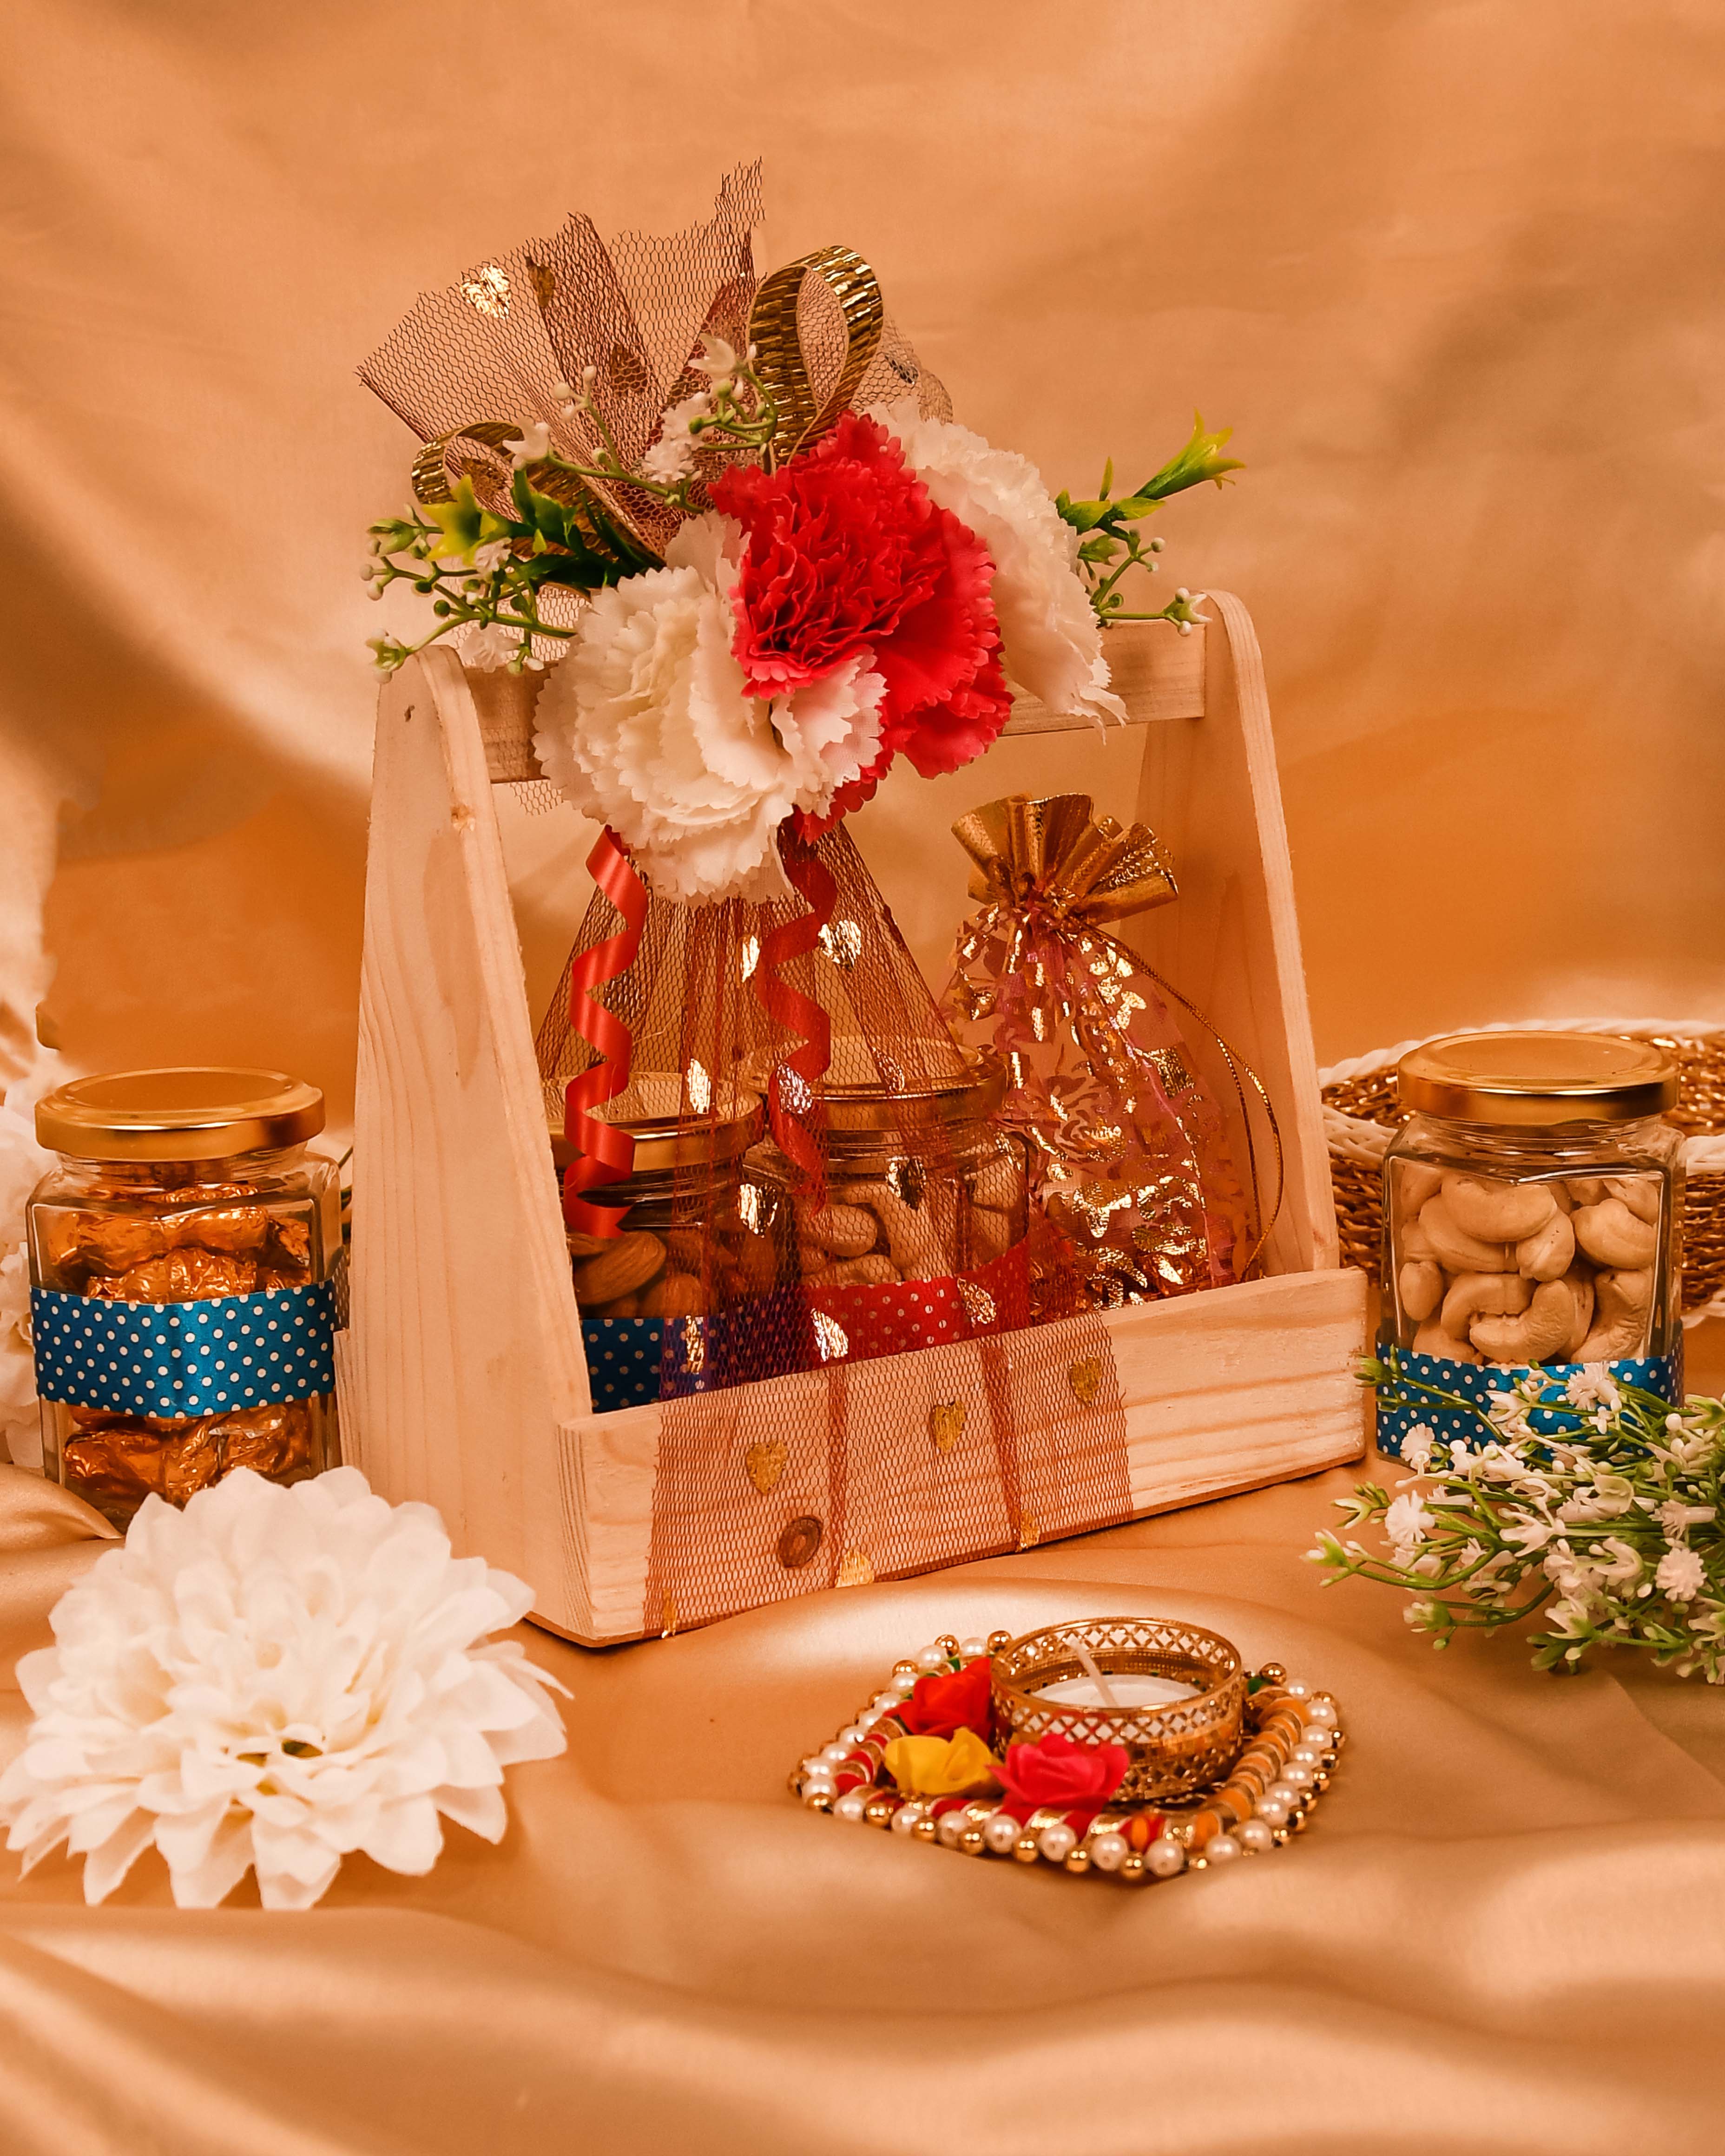 Diwali Mdf Gift Hamper, For Gifting Purpose at Rs 220/piece in Bengaluru |  ID: 24044956448